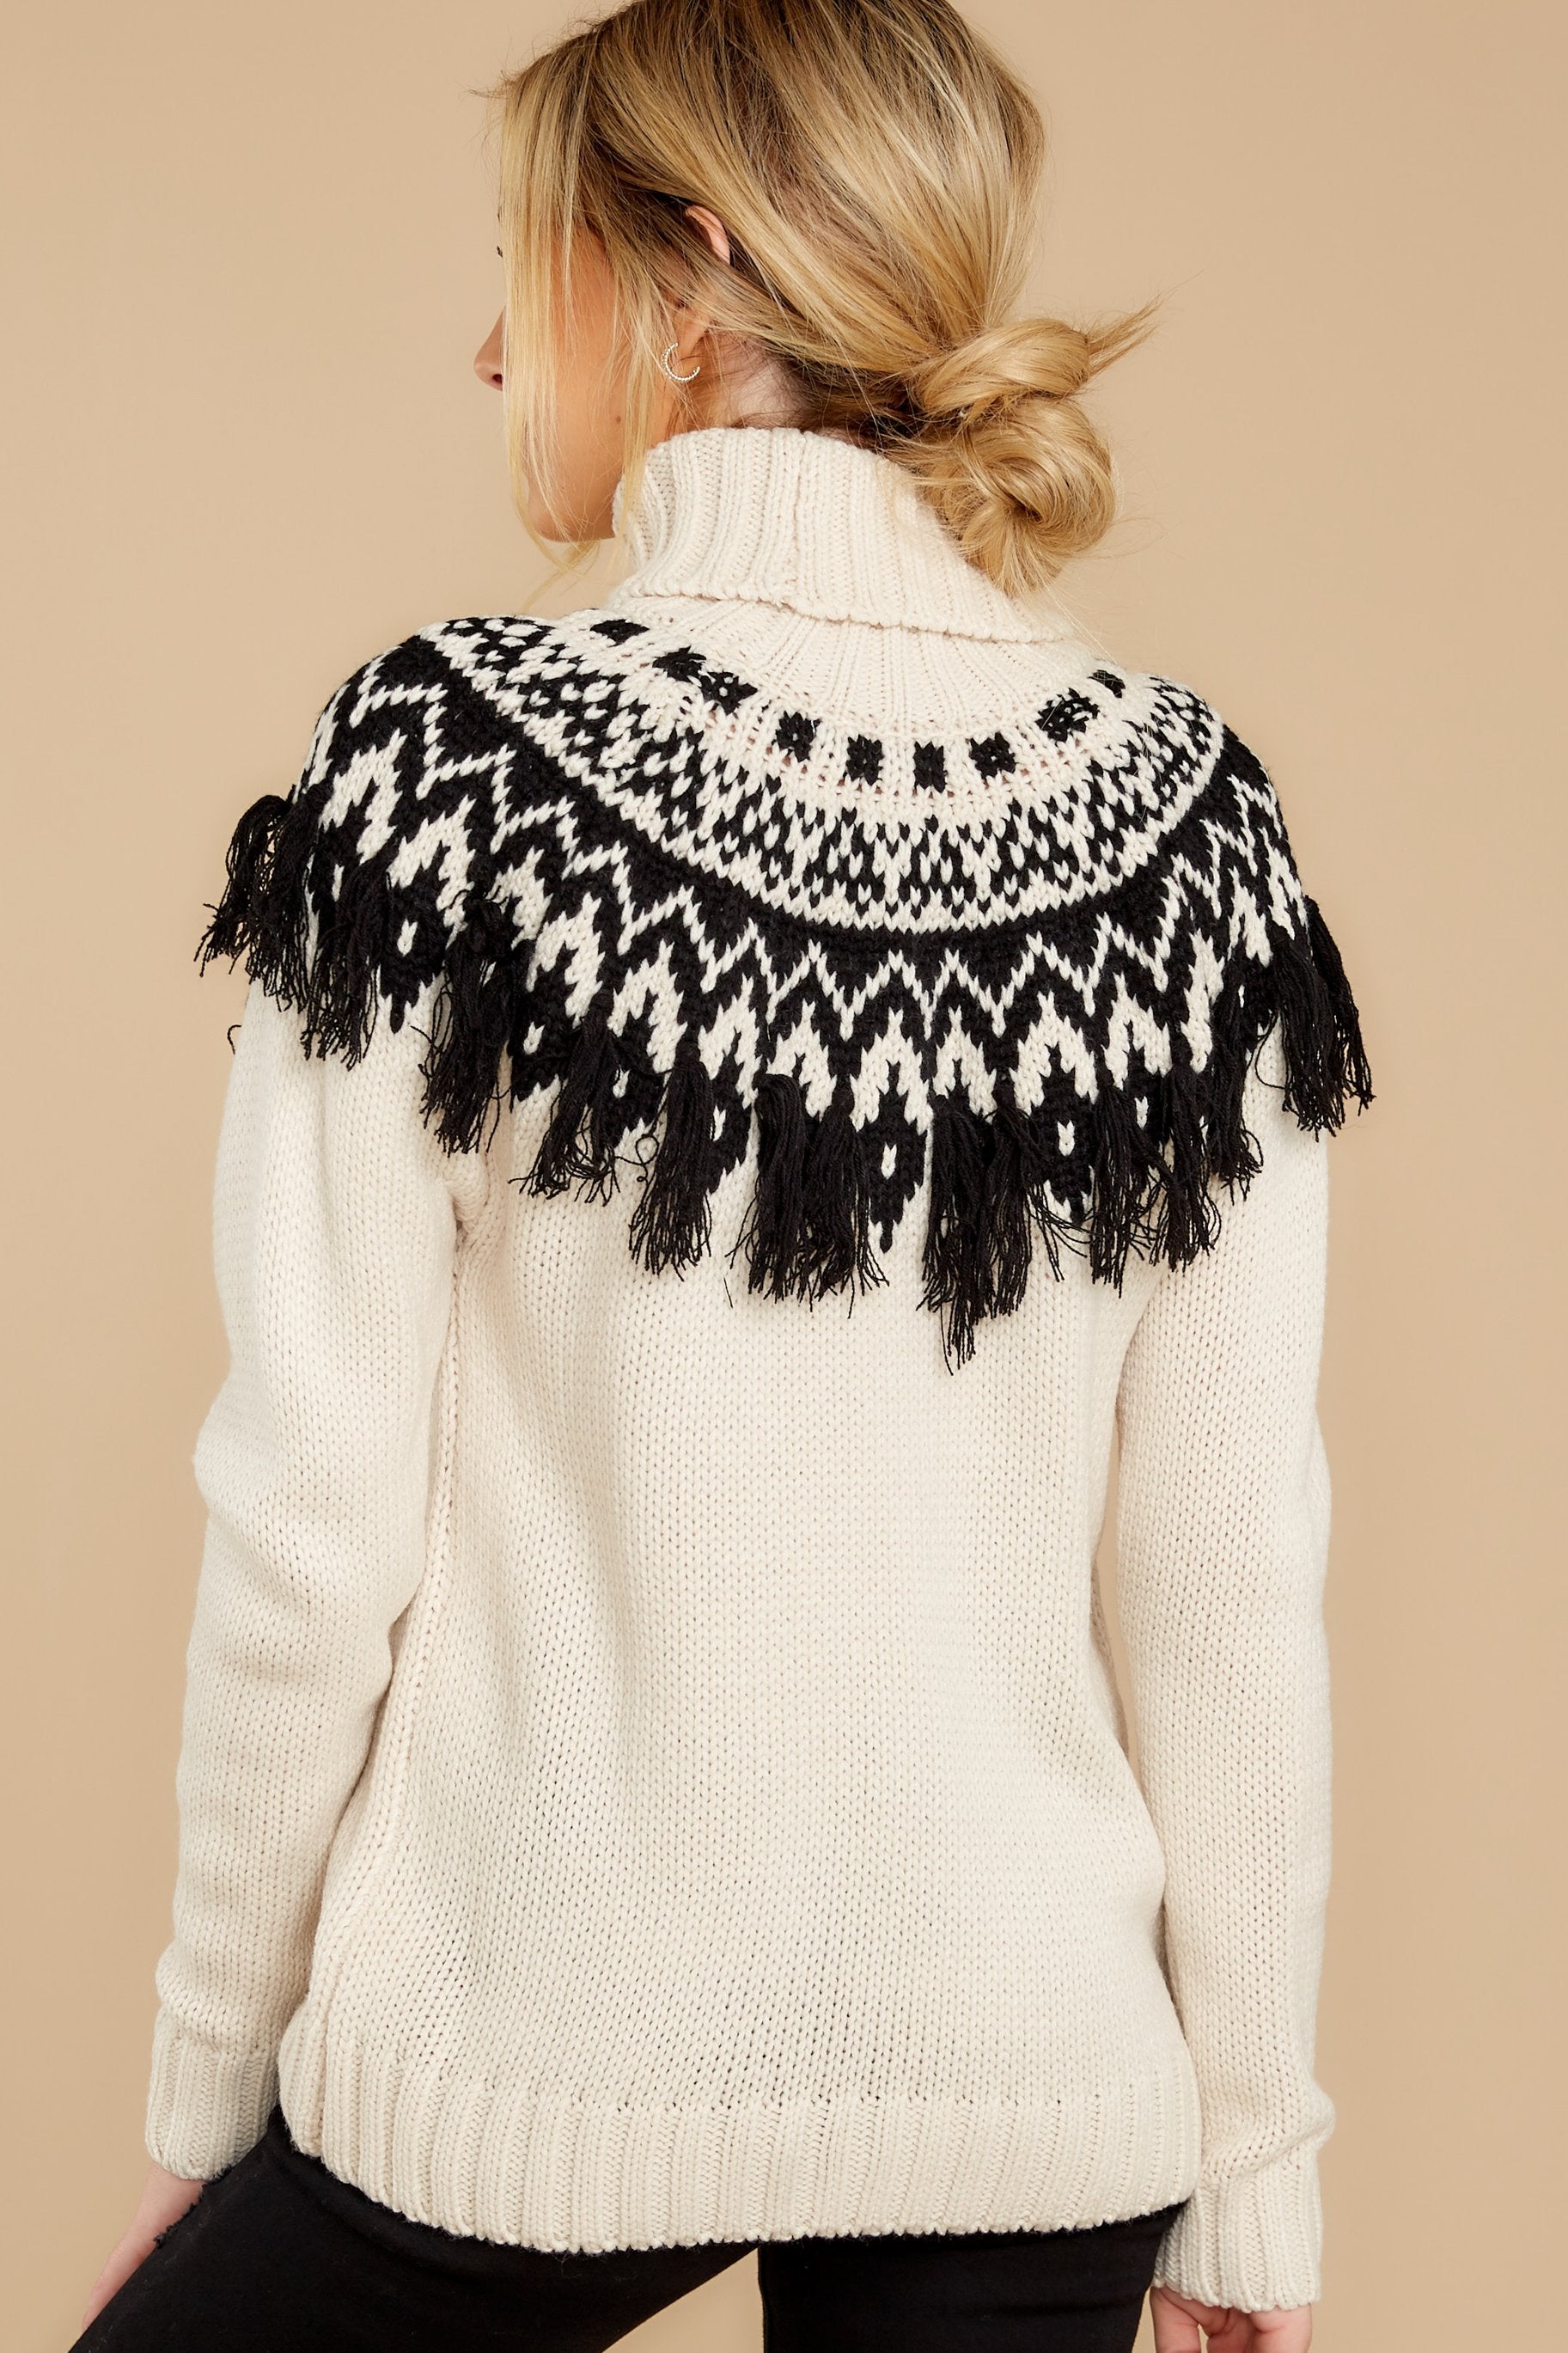 10 Holding You Close White And Black Turtleneck Sweater at reddress.com